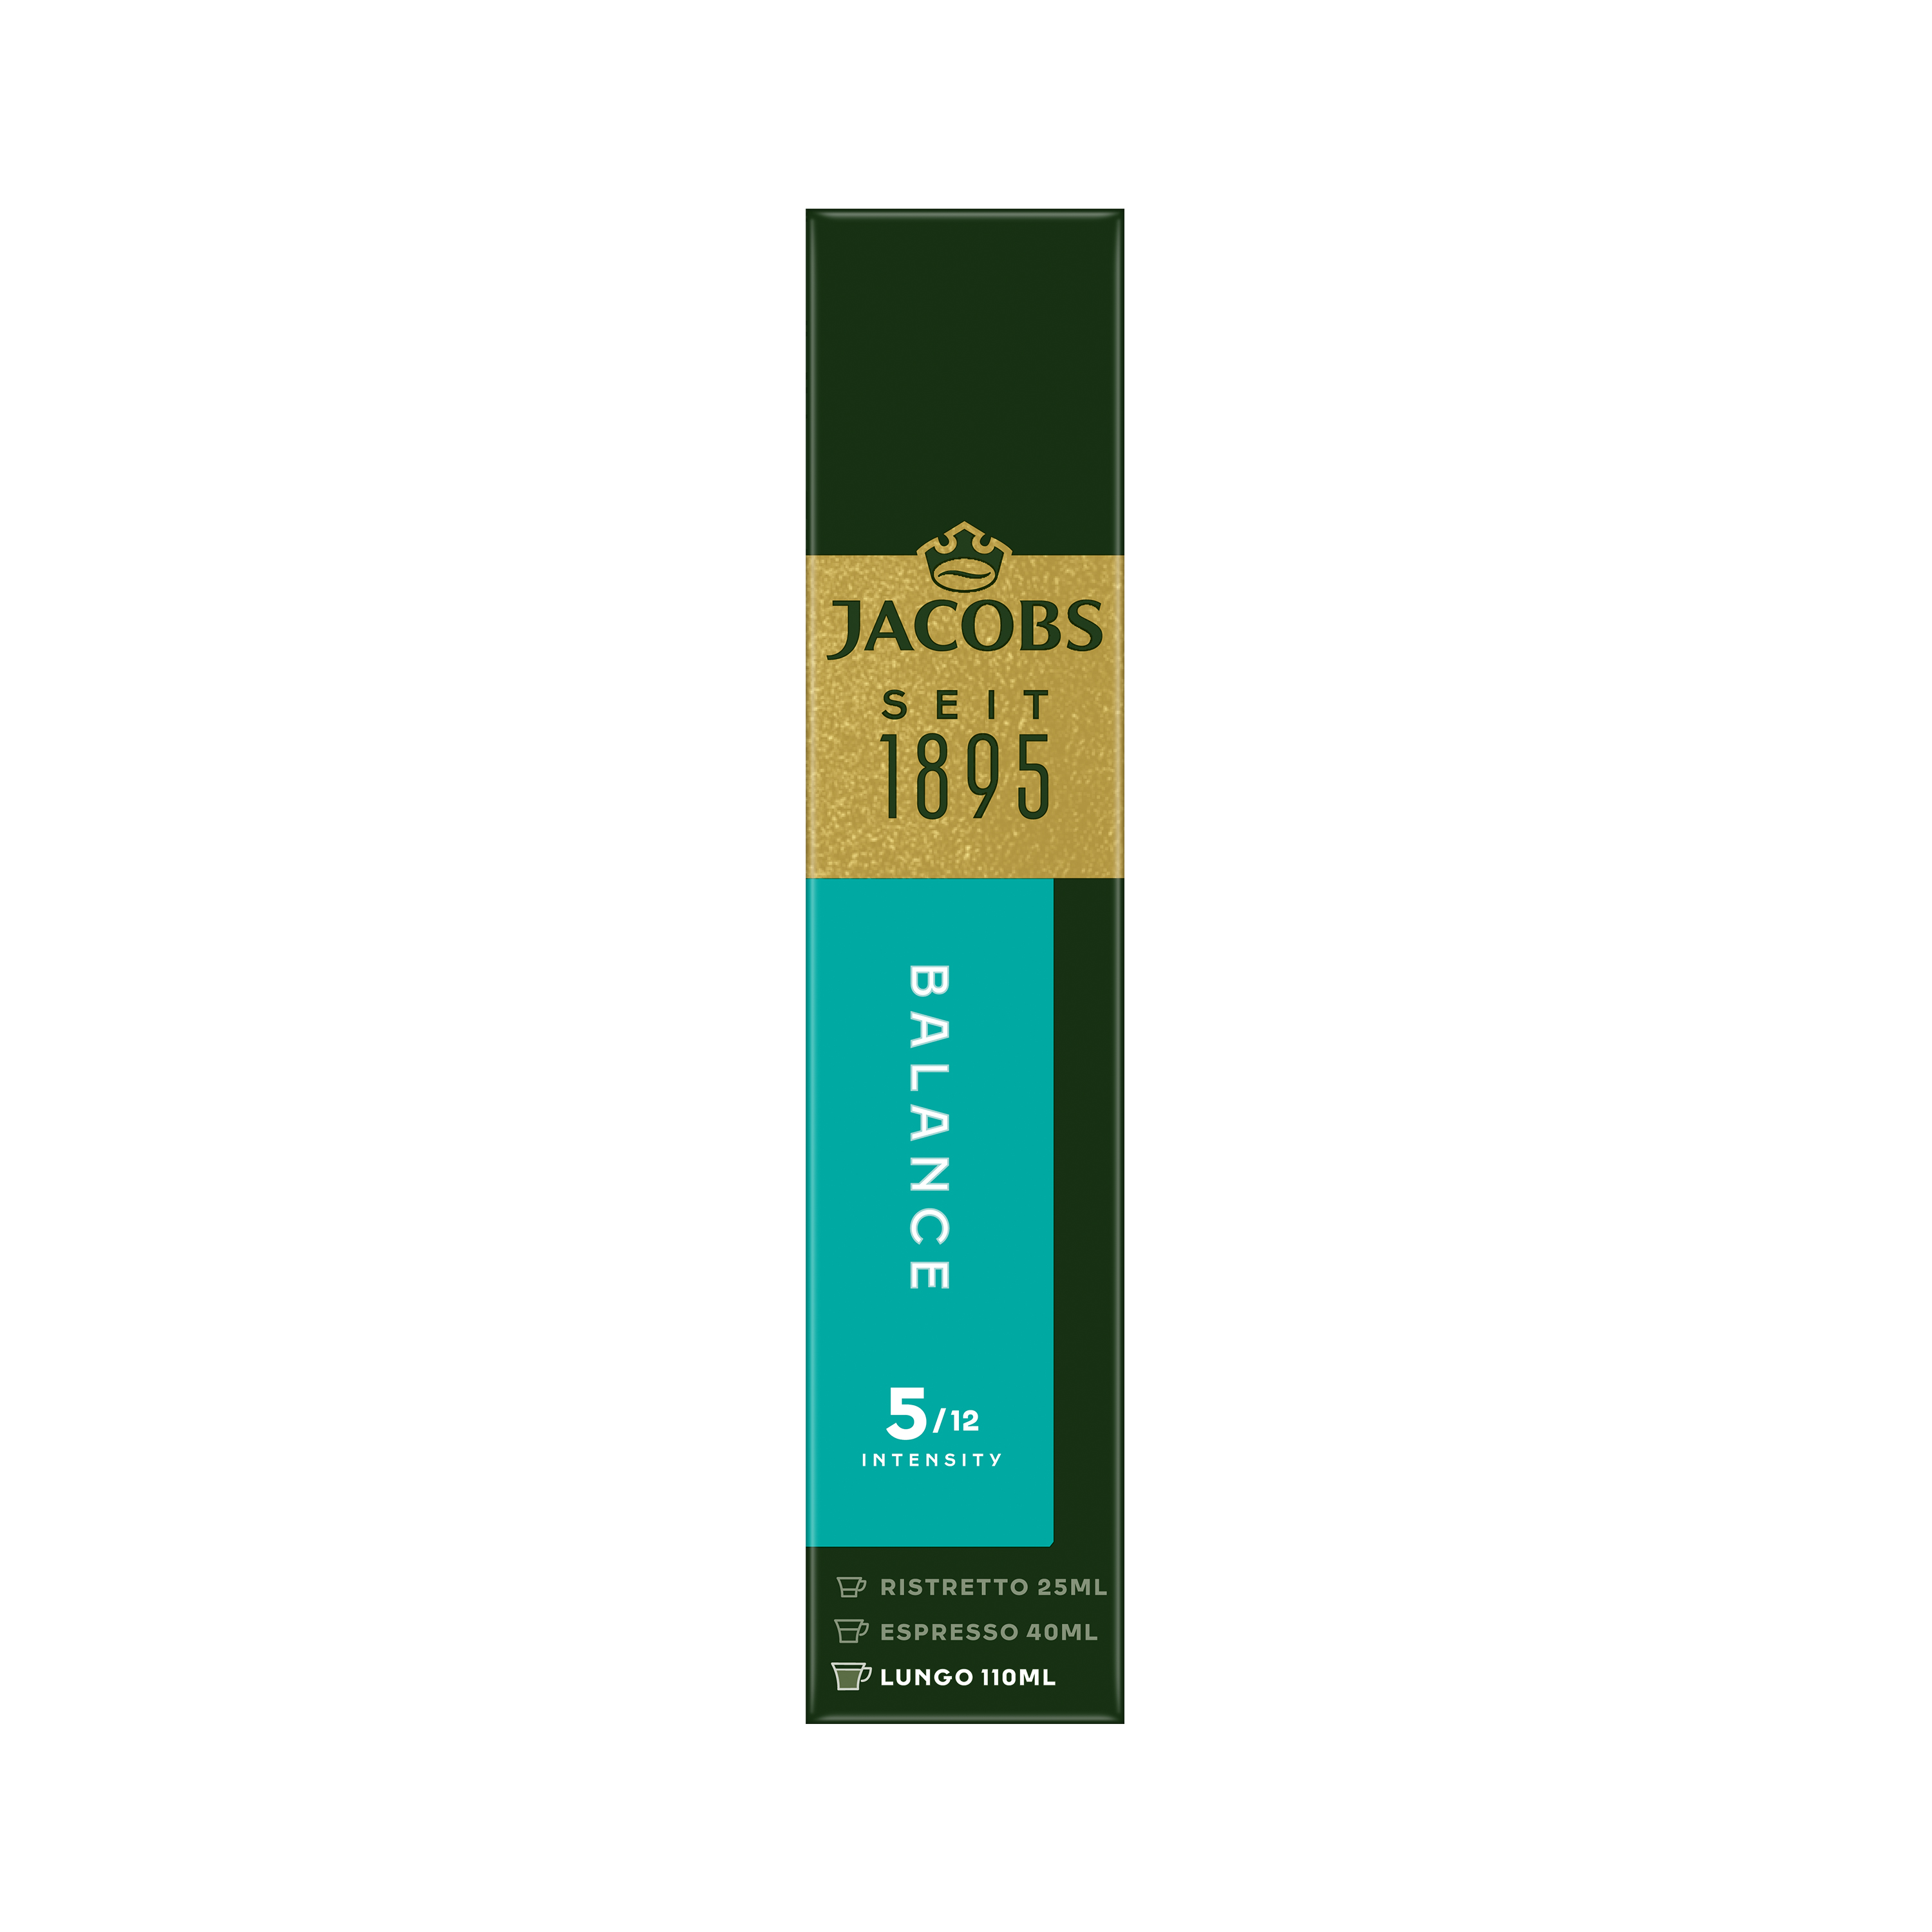 JACOBS Lungo 6 Classico (Nespresso System) Nespresso®* kompatible & je Kaffeekapseln Balance 100